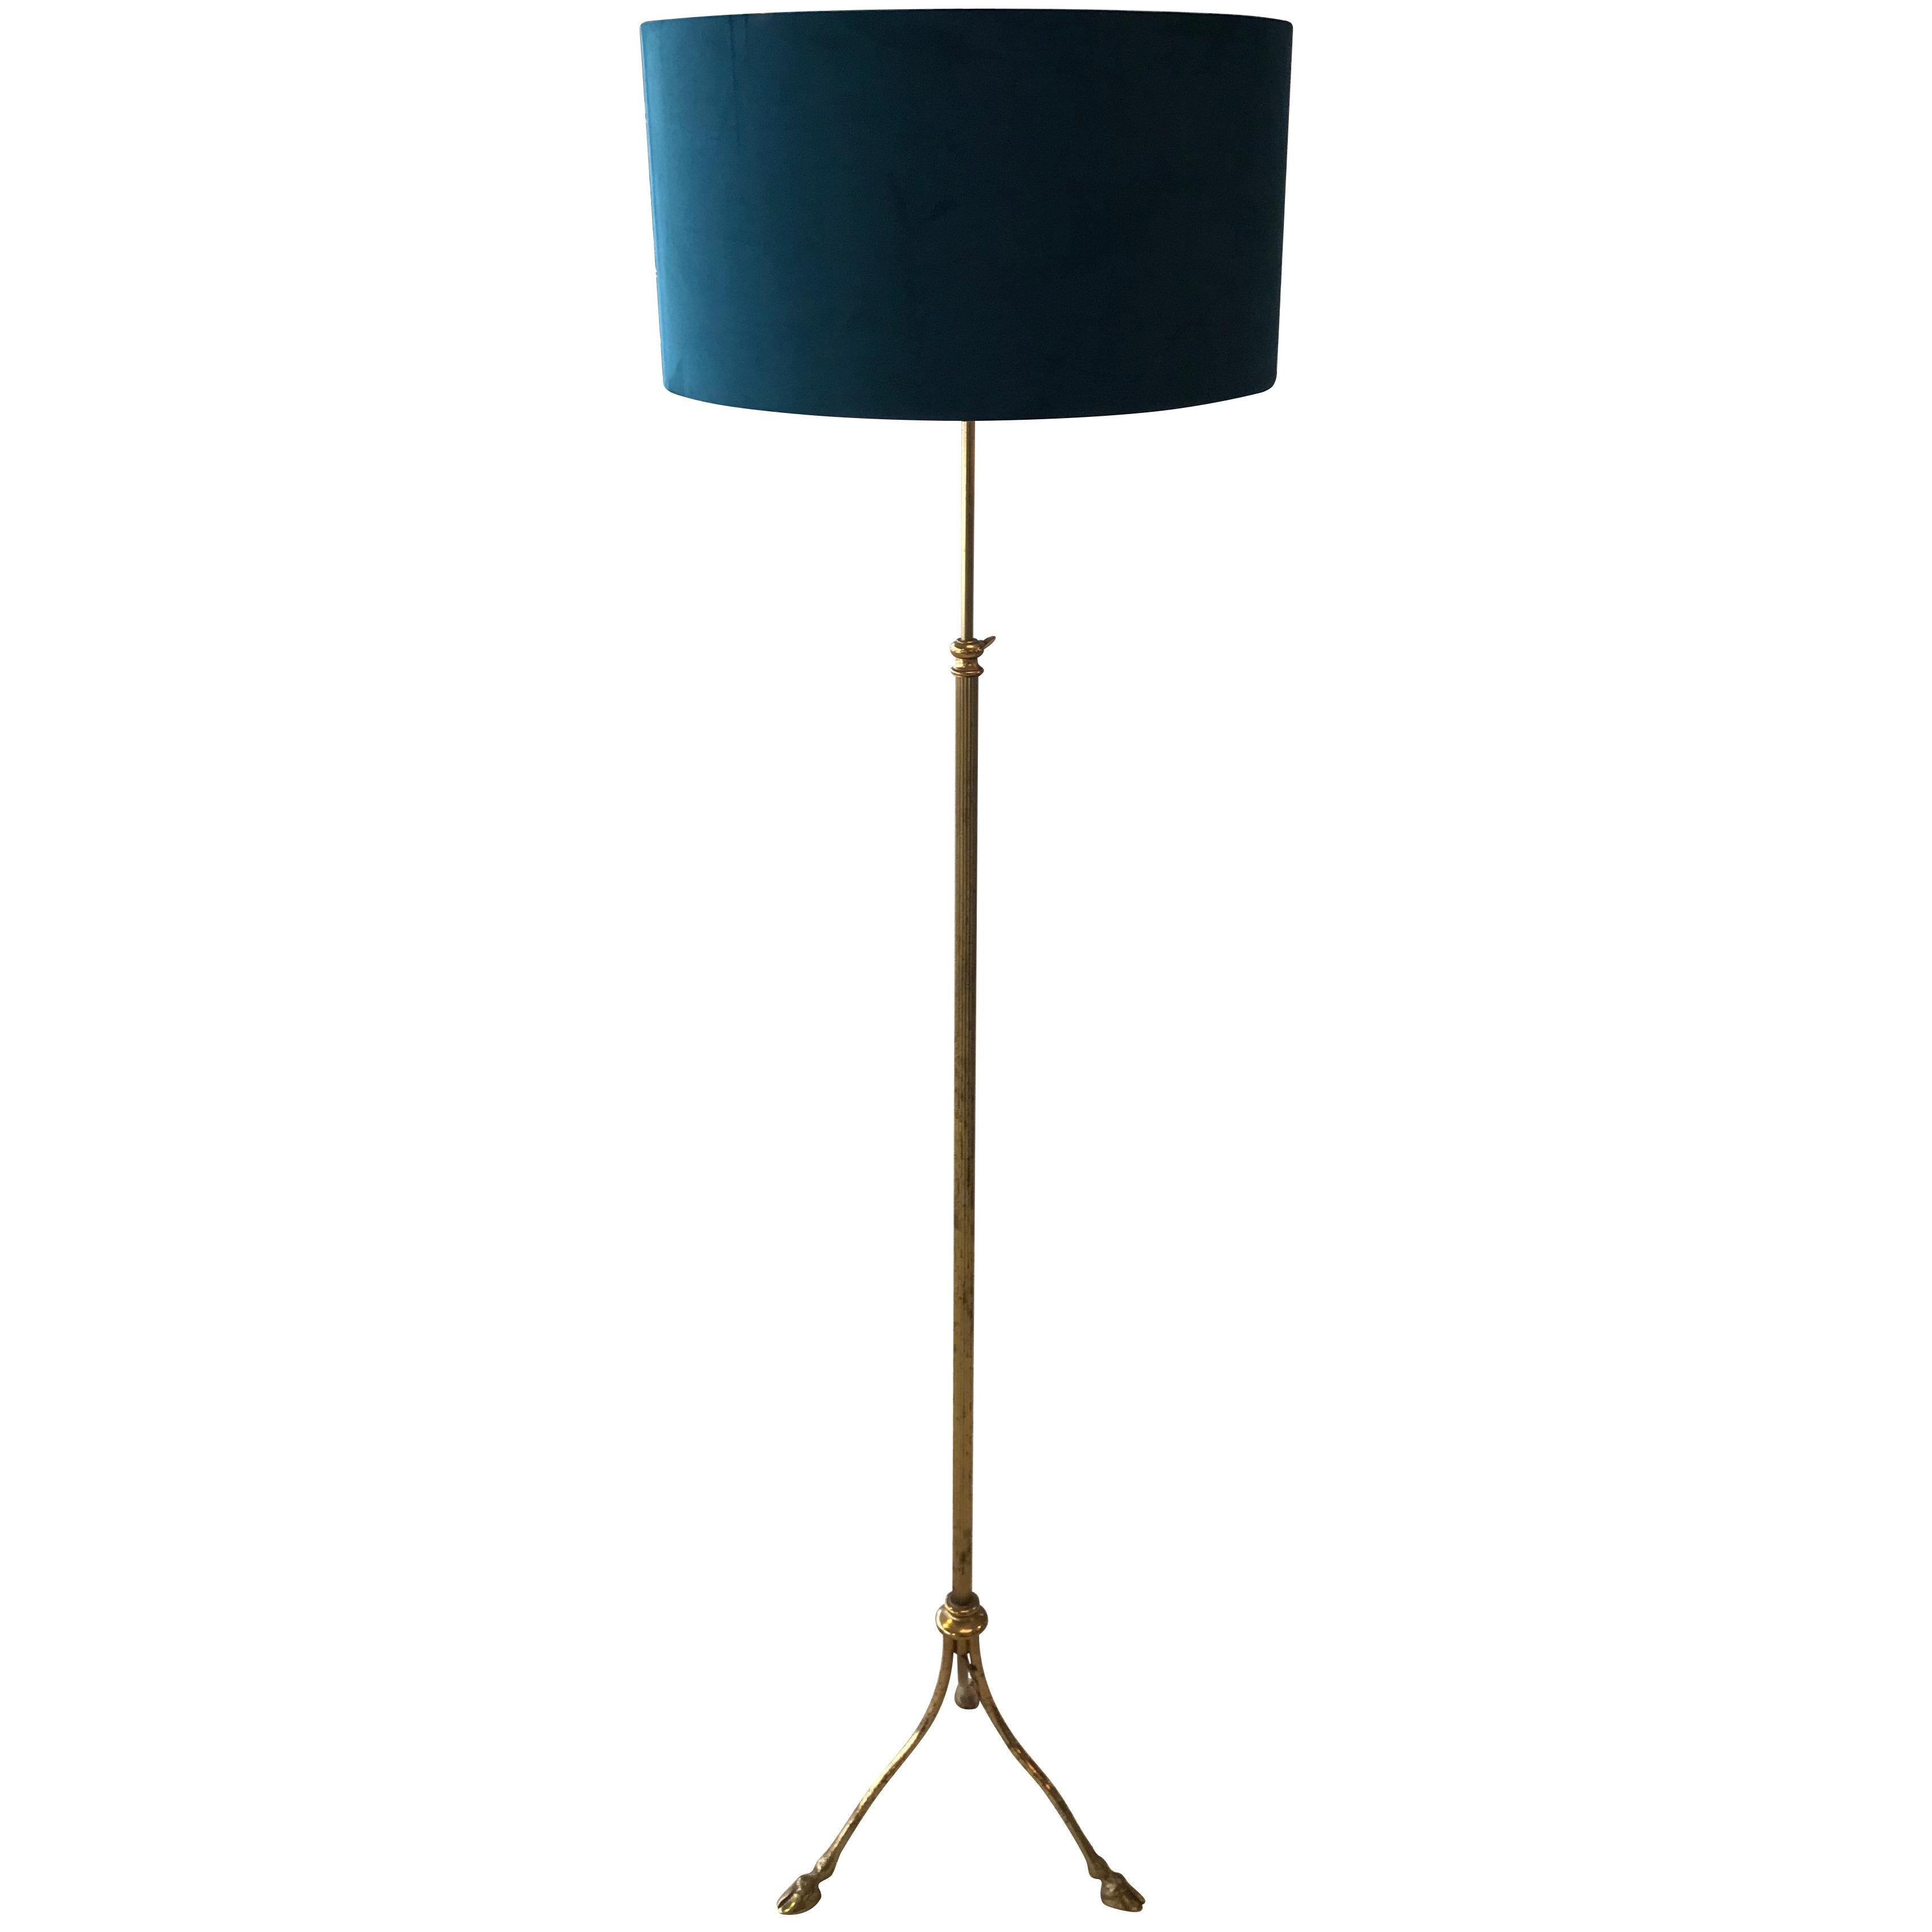 Interesting French Adjustable Standard Lamp